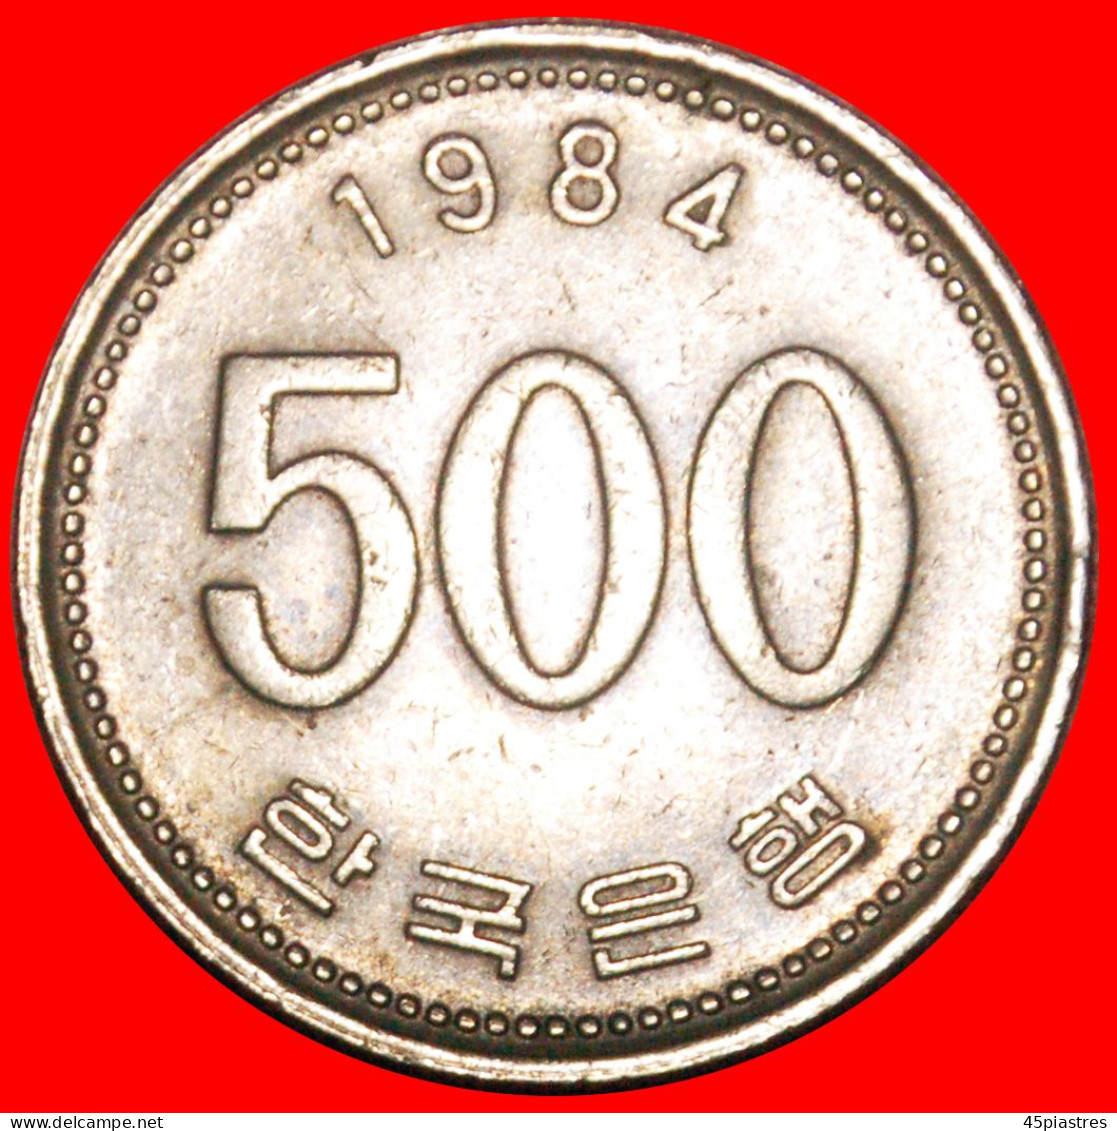 * MANCHURIAN CRANE (1982-2019): SOUTH KOREA  500 WON 1984! ·  LOW START · NO RESERVE! - Korea (Zuid)